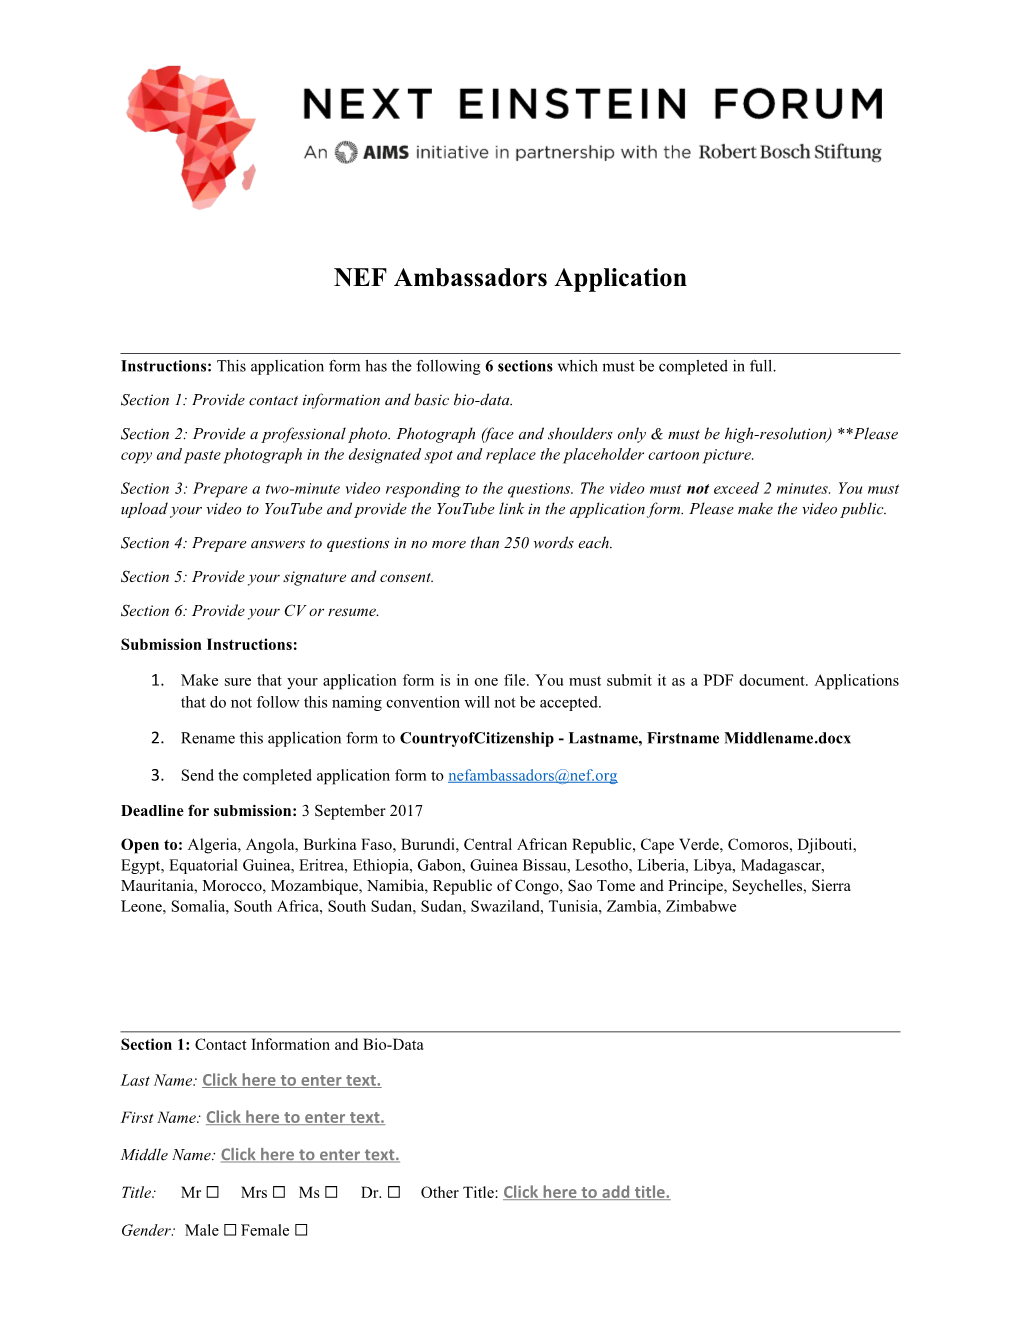 NEF Ambassadors Application